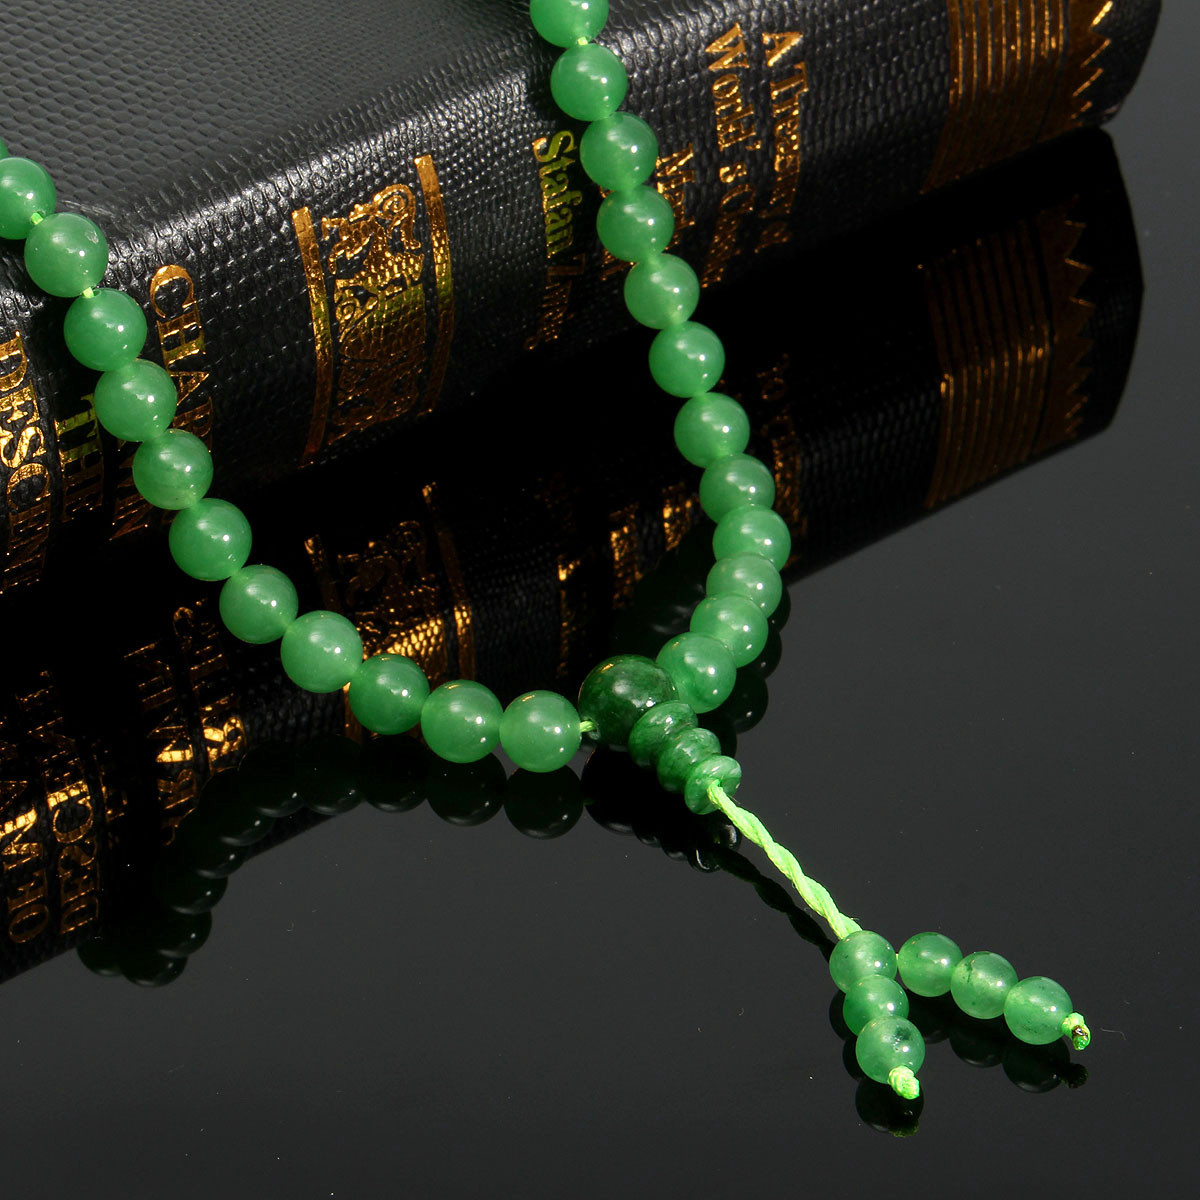 8mm-Green-Agate-Buddhist-Prayer-Beads-Bracelet-Necklace-Jewelry-1054960